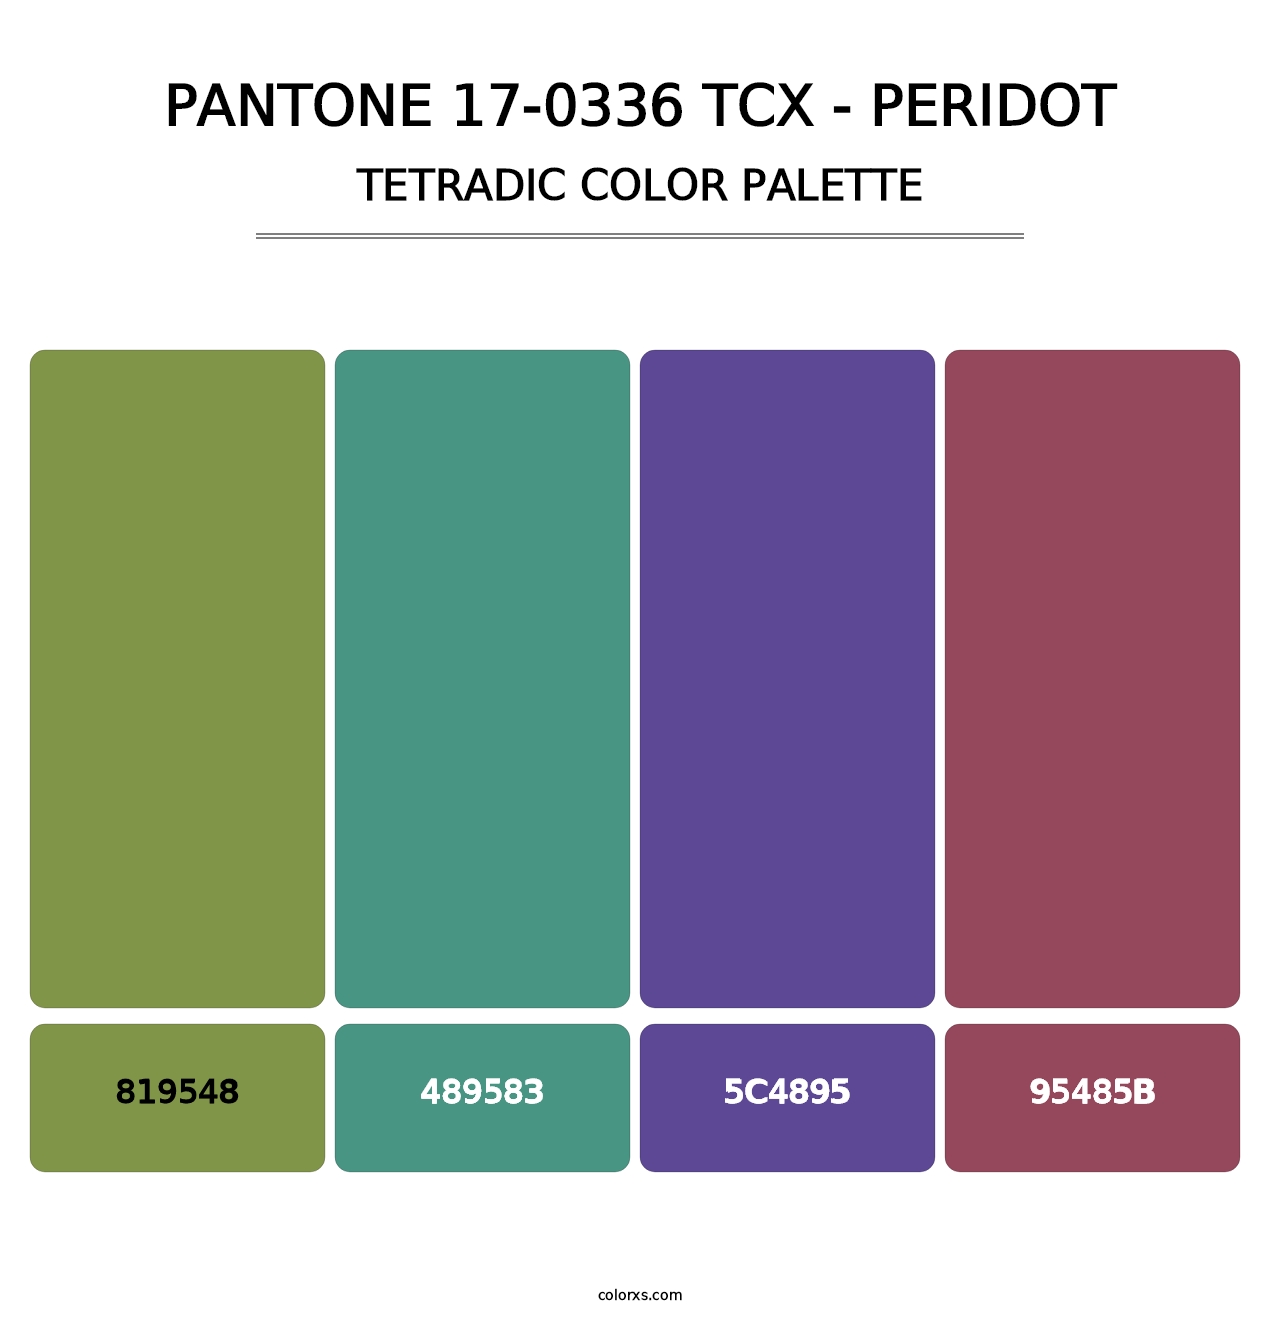 PANTONE 17-0336 TCX - Peridot - Tetradic Color Palette